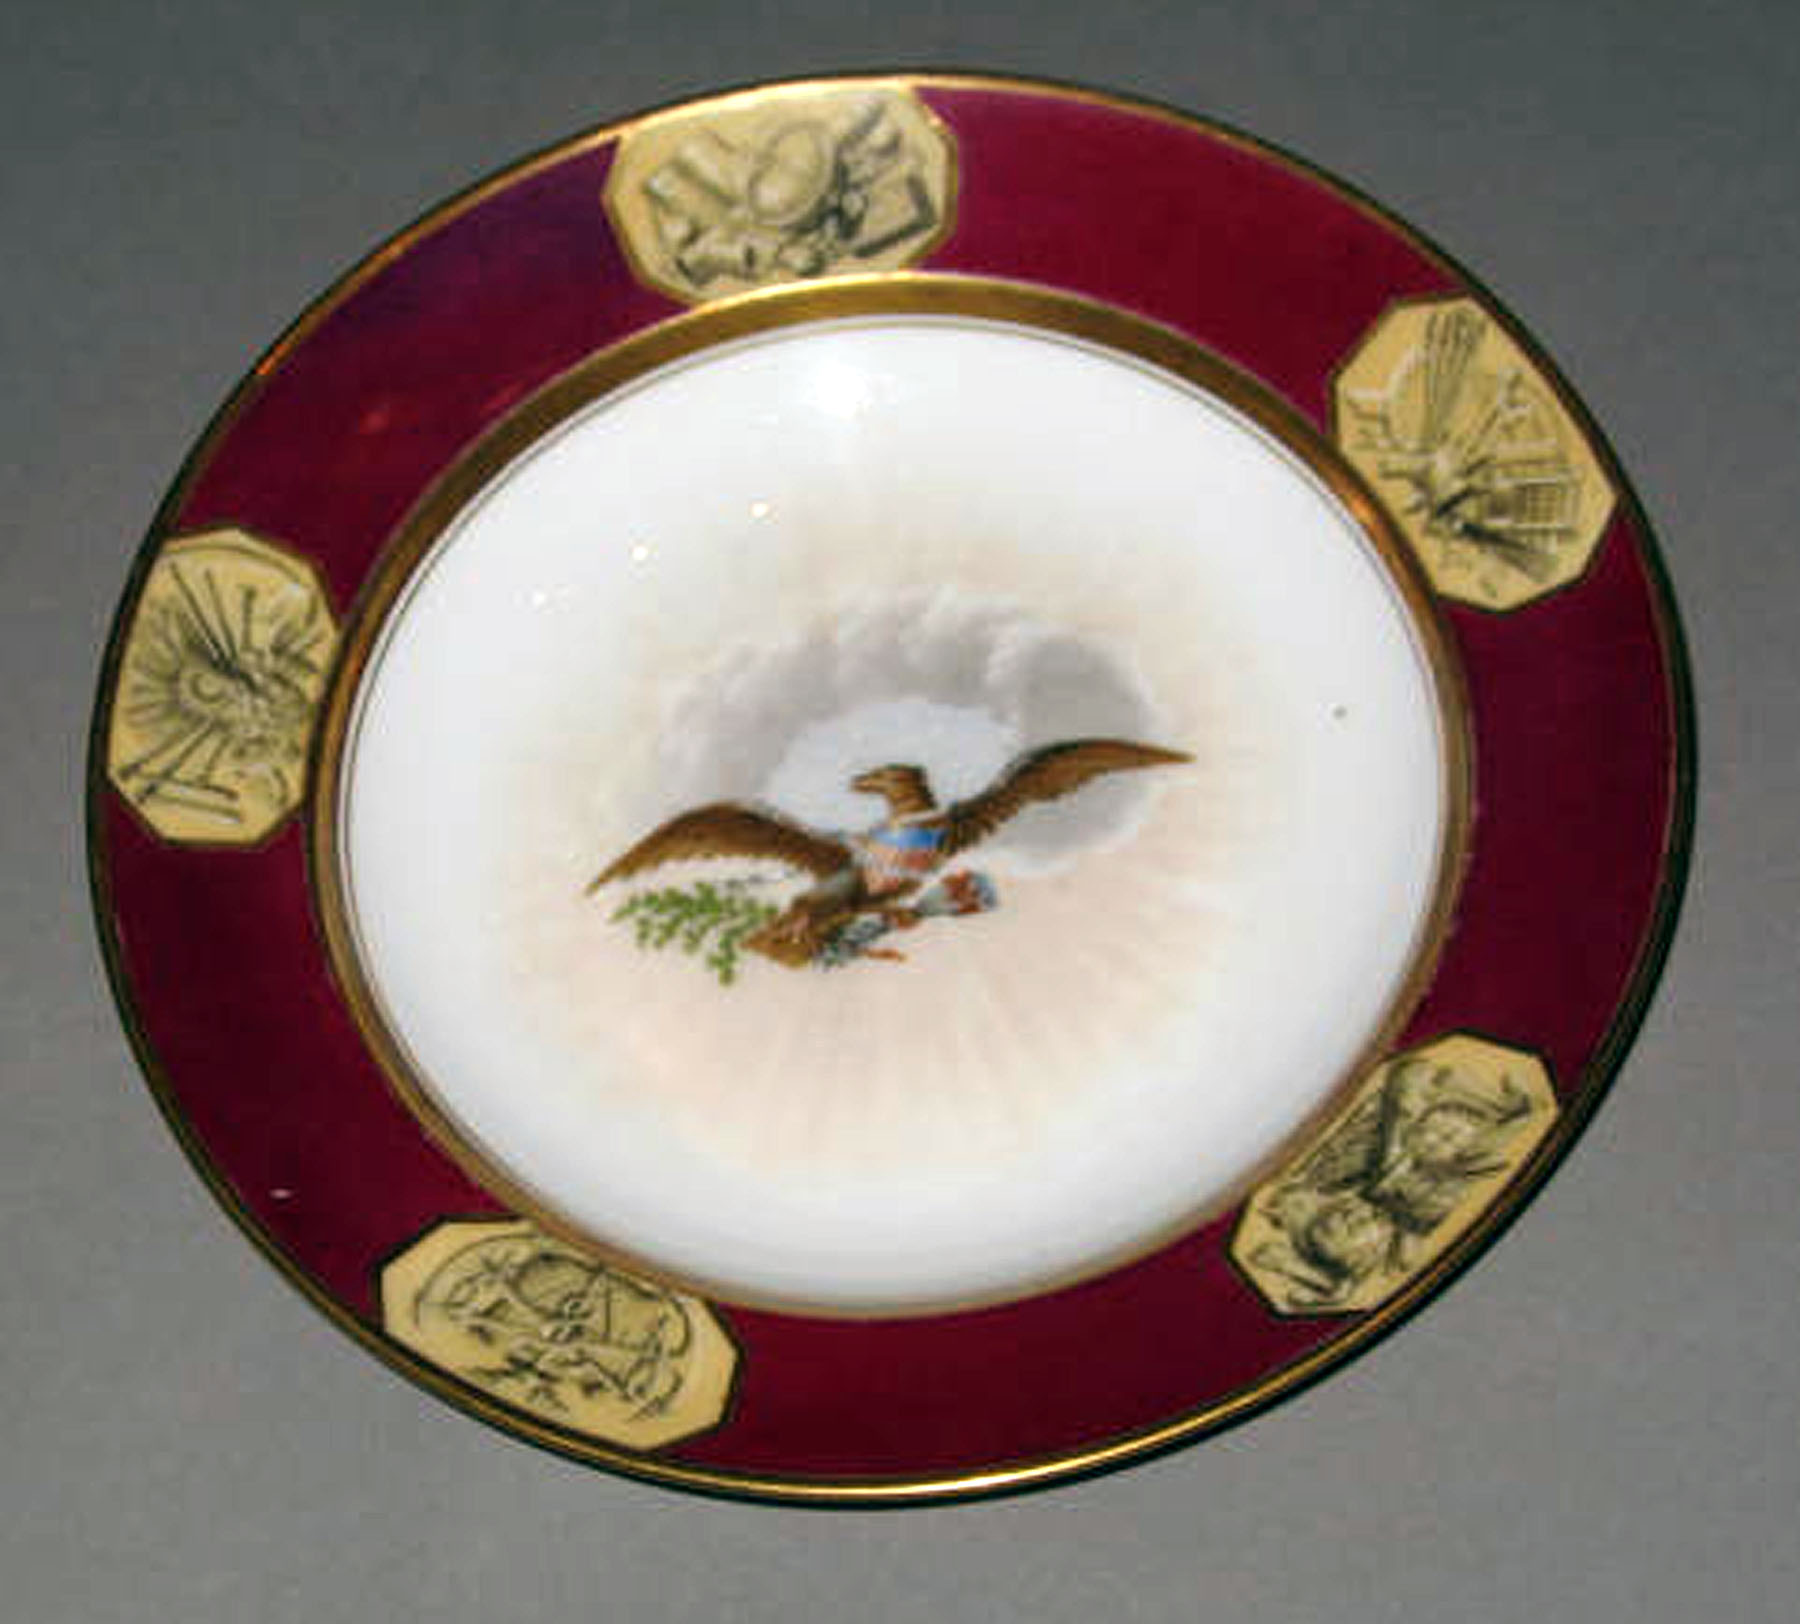 1958.1606.044 Porcelain plate